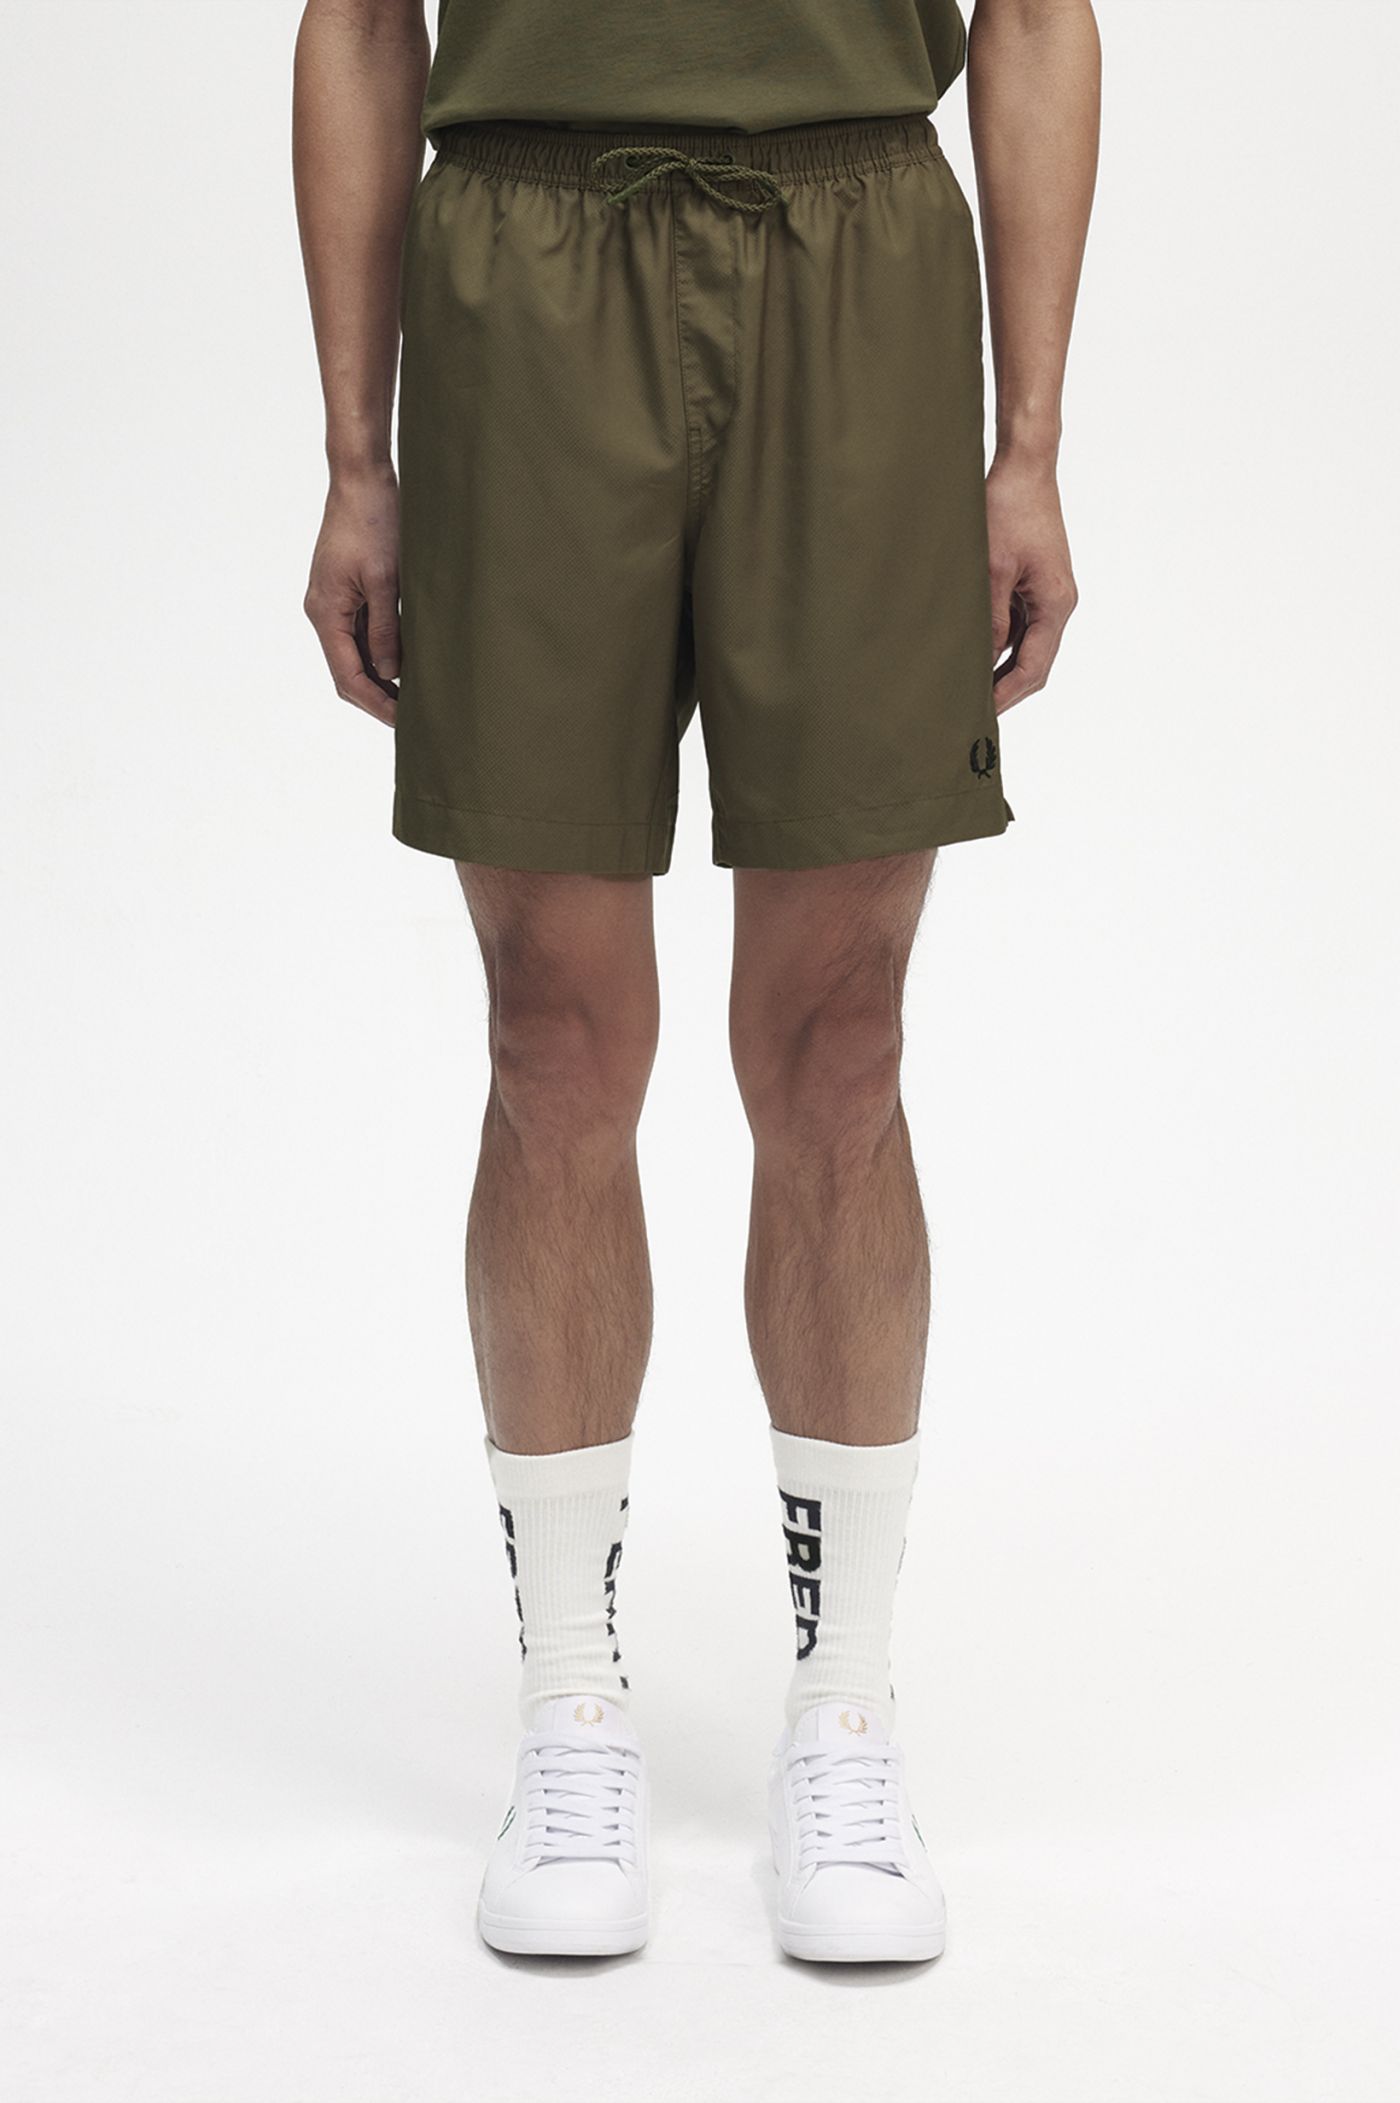 Classic Swimshort - Uniform Green | Men's Shorts | Designer Shorts ...